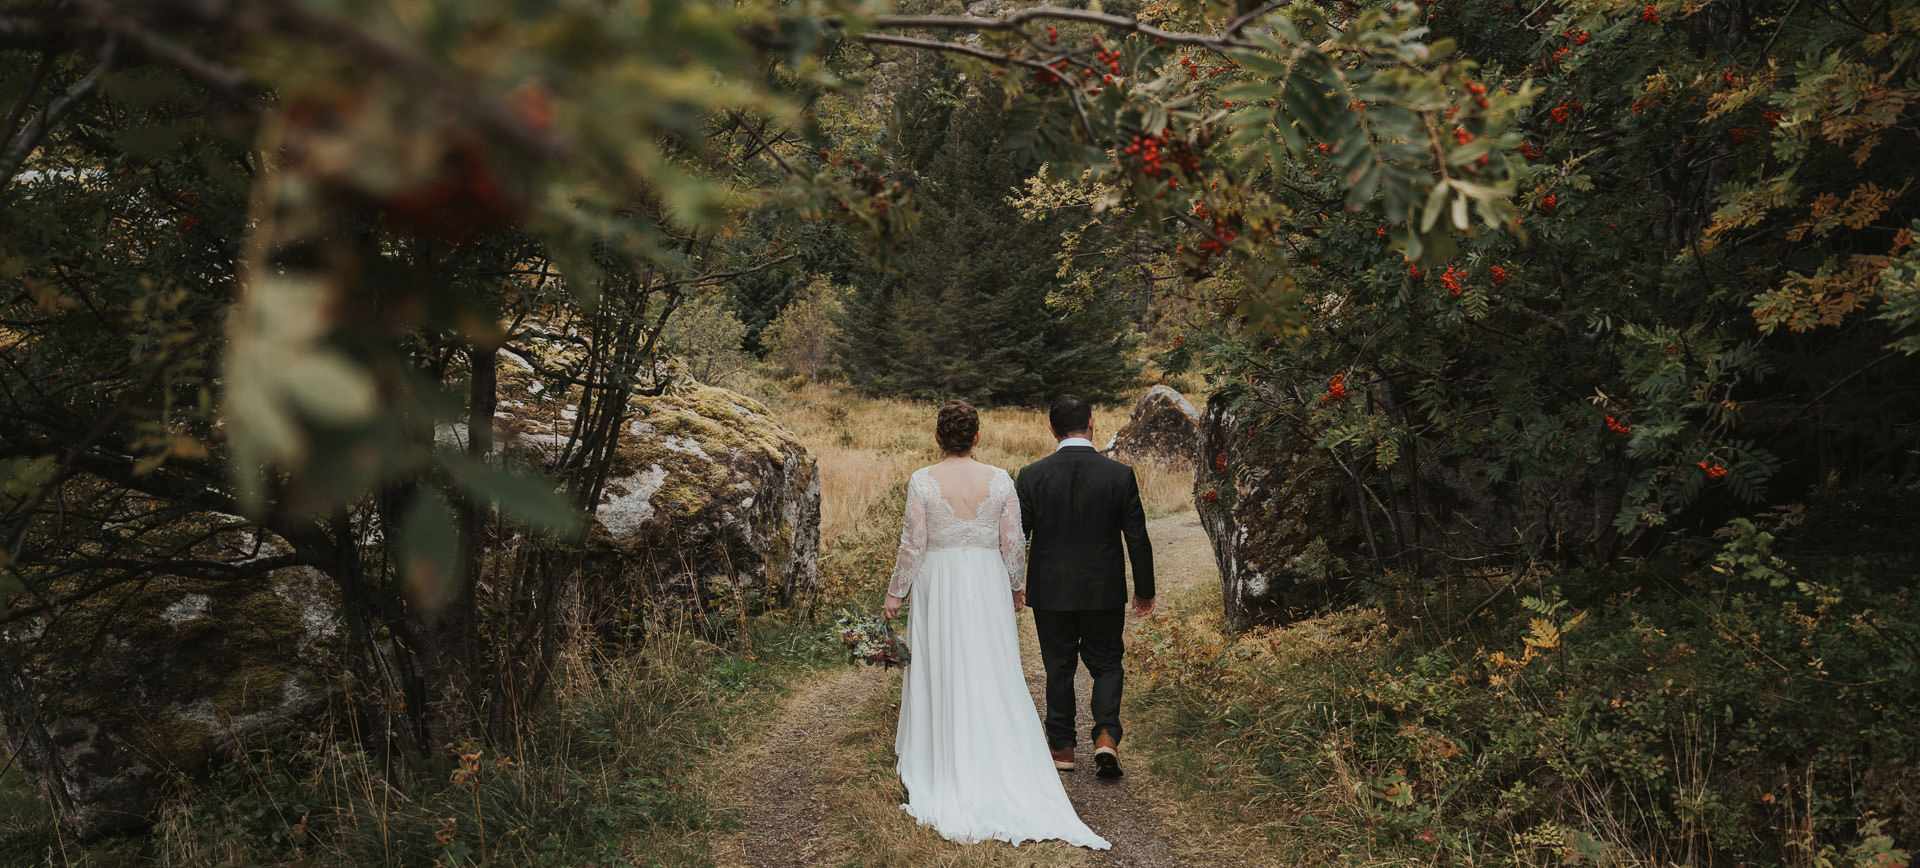 Hiking wedding elopement in Lofoten